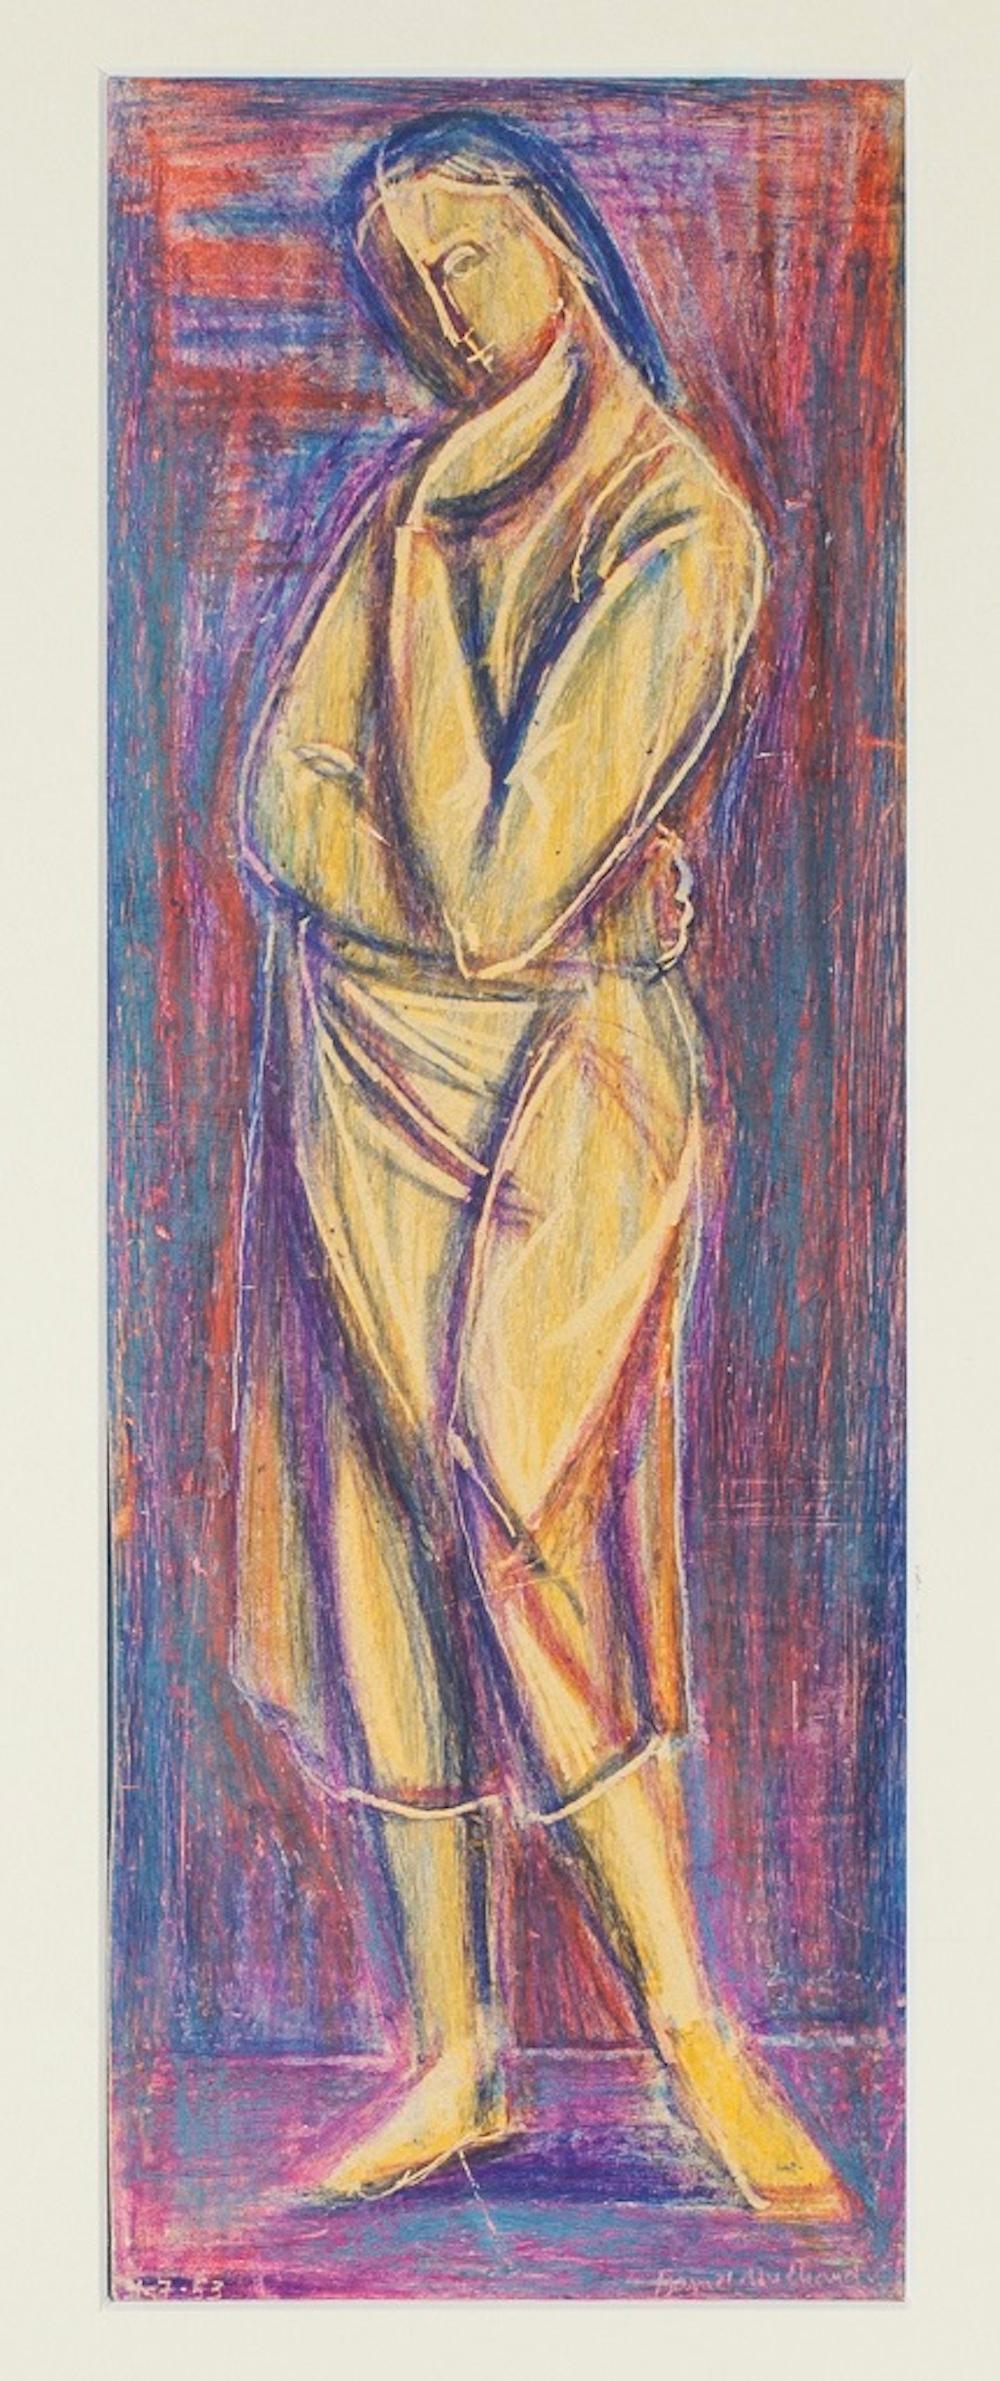 Daniel Milhaud Figurative Art - Woman Figure - Oil Pastel Drawing by D. Milhaud - 1932